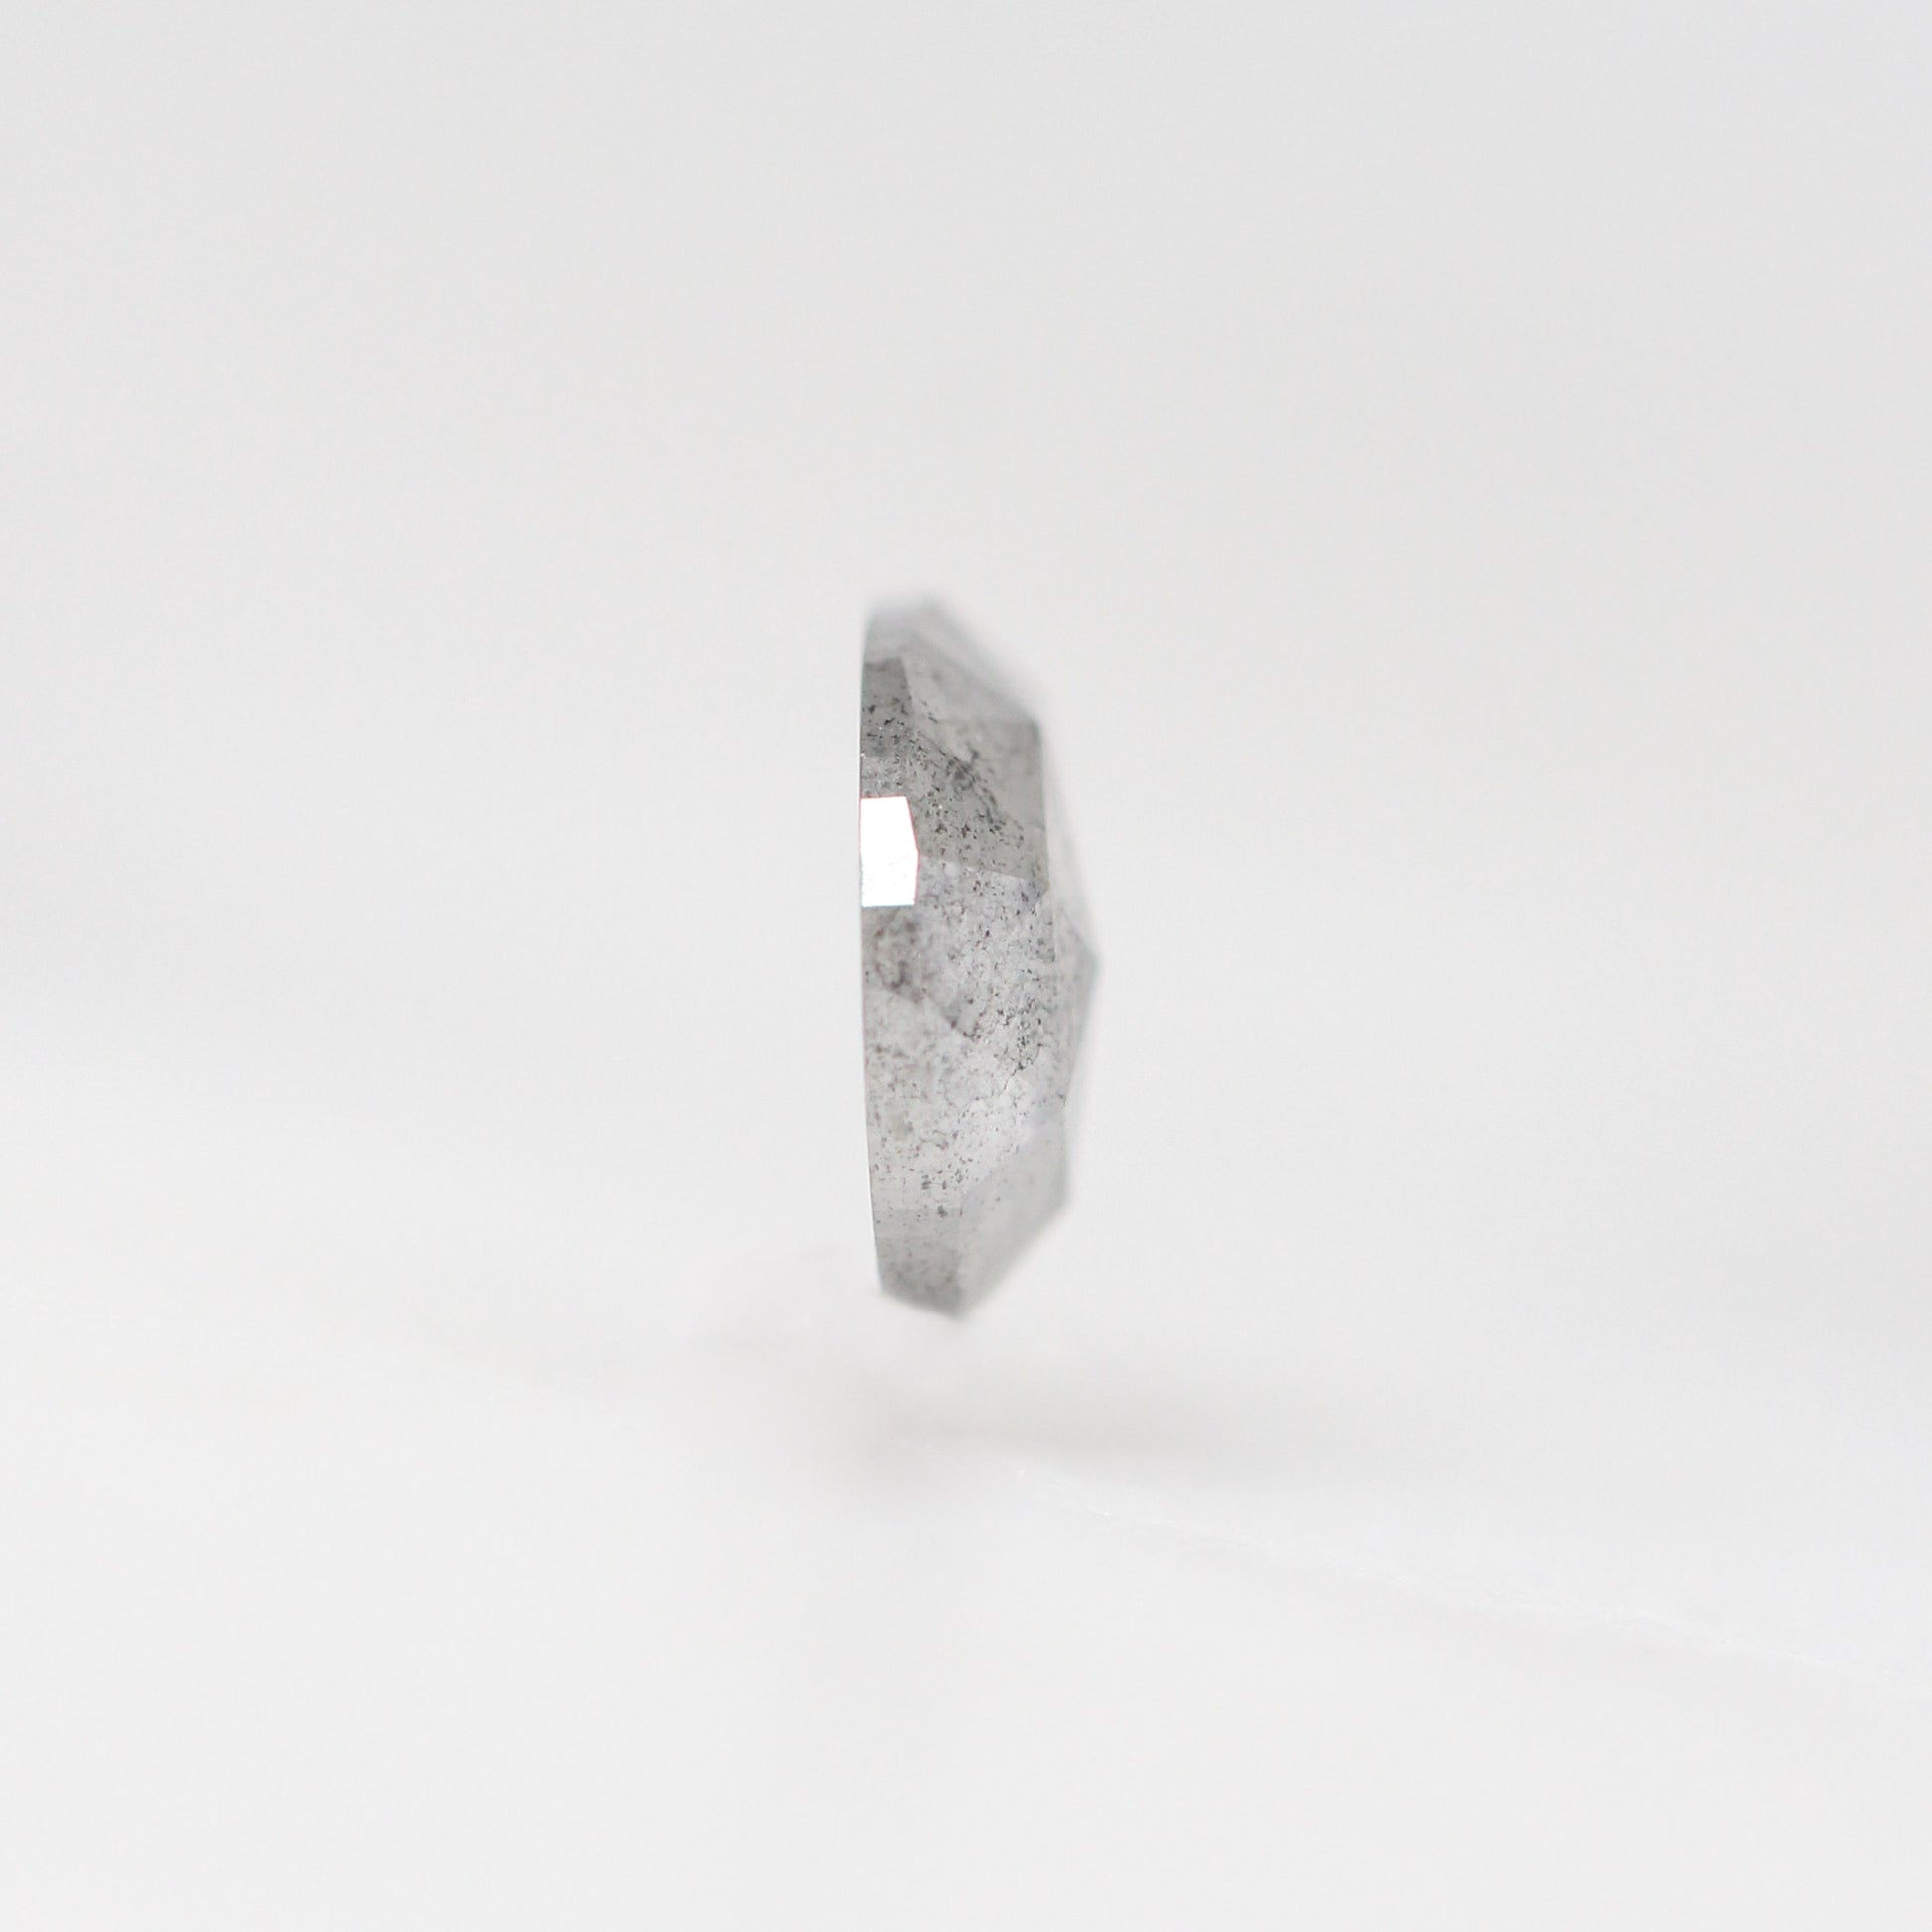 0.71 Carat Half Moon Misty Gray Celestial Diamond for Custom Work - Inventory Code MWHM071 - Midwinter Co. Alternative Bridal Rings and Modern Fine Jewelry